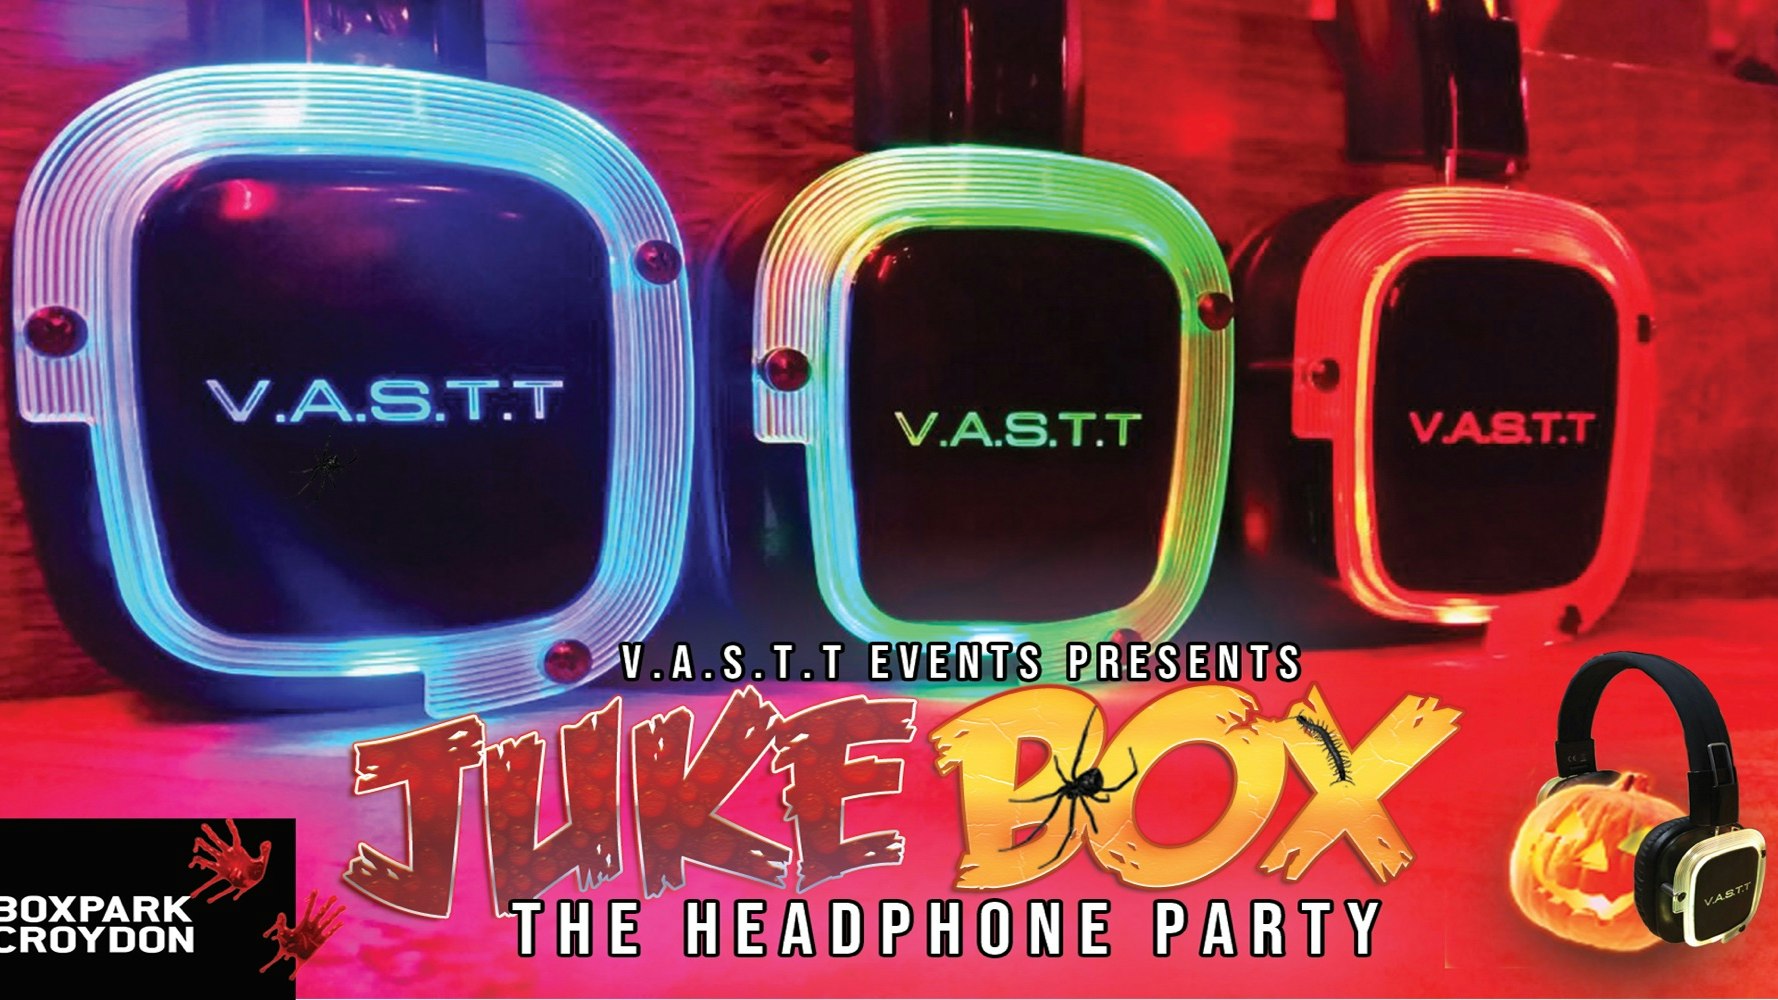 HALLOWEEN Headphone party @BOXPARK CROYDON